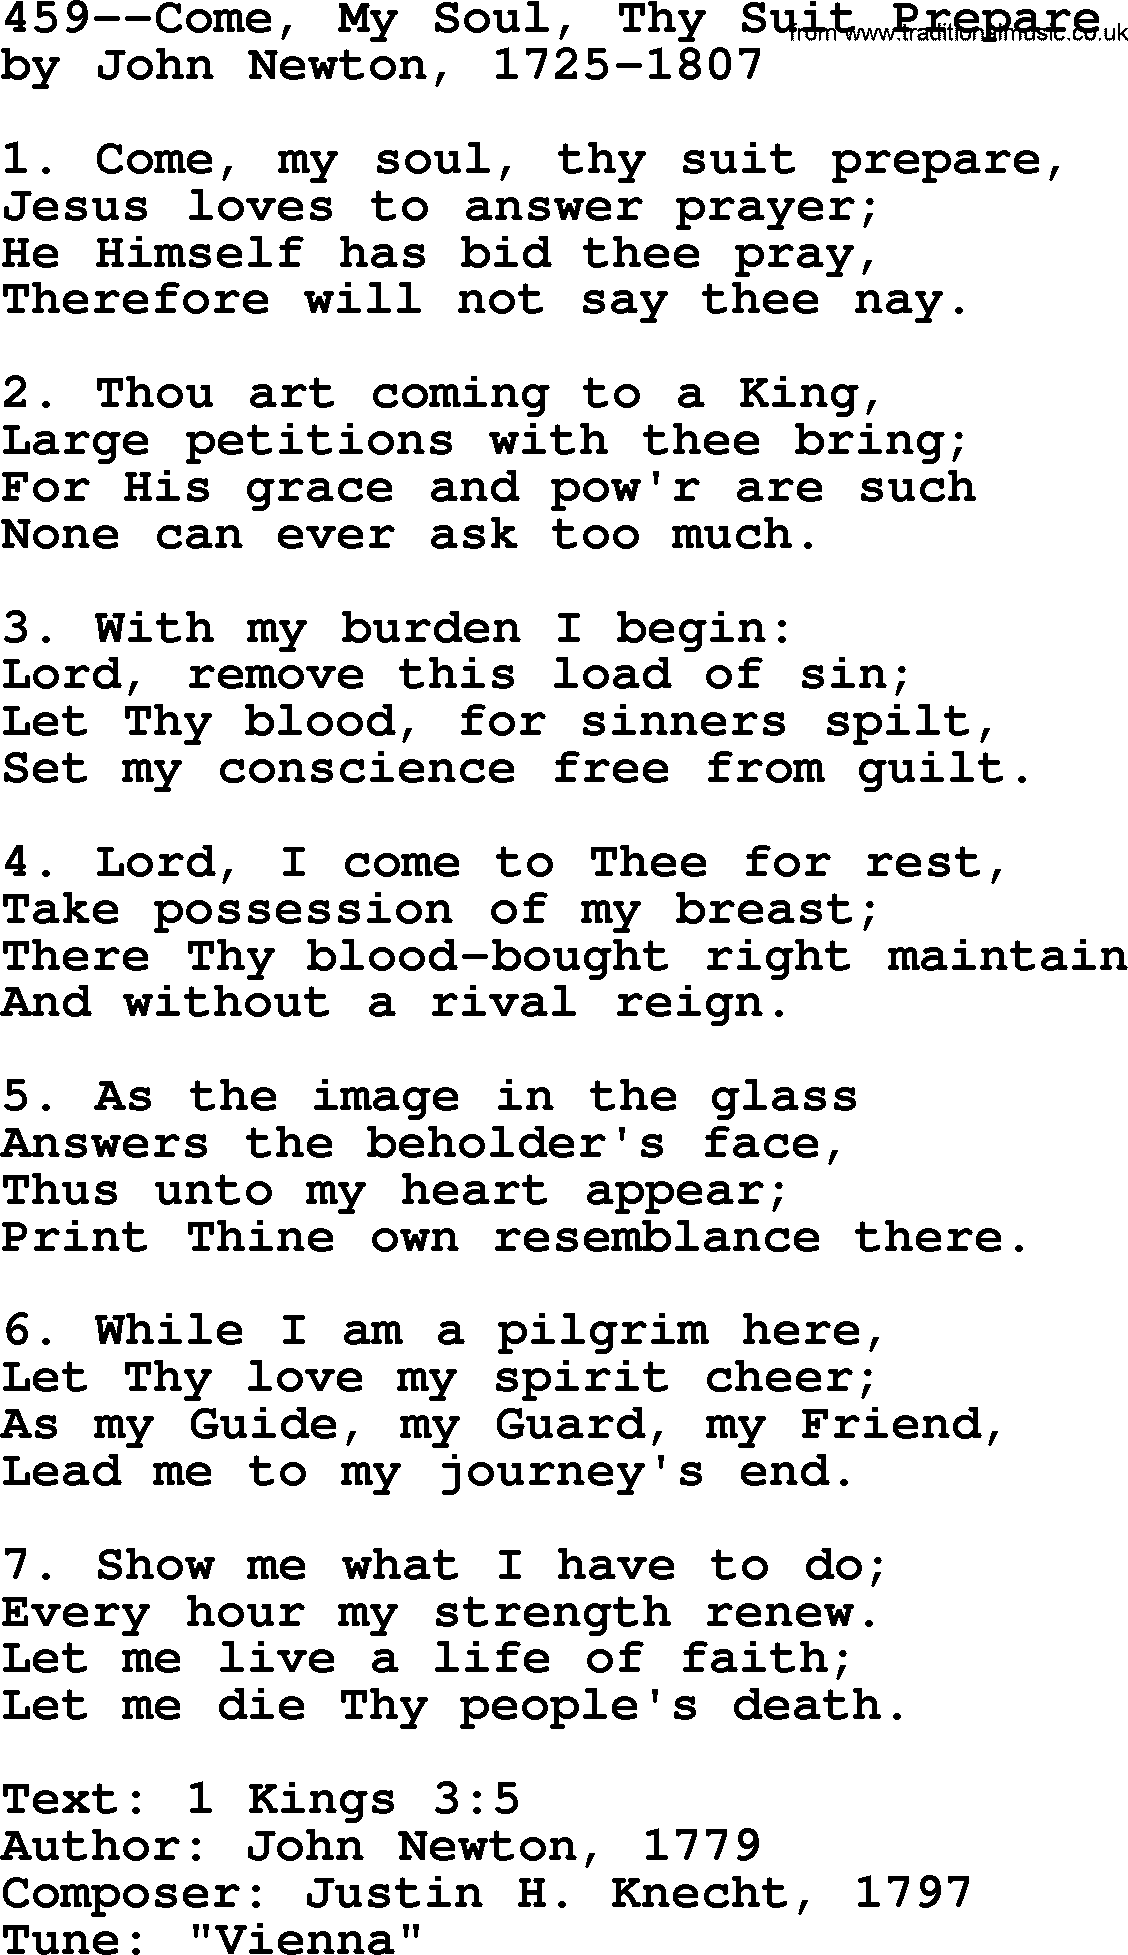 Lutheran Hymn: 459--Come, My Soul, Thy Suit Prepare.txt lyrics with PDF